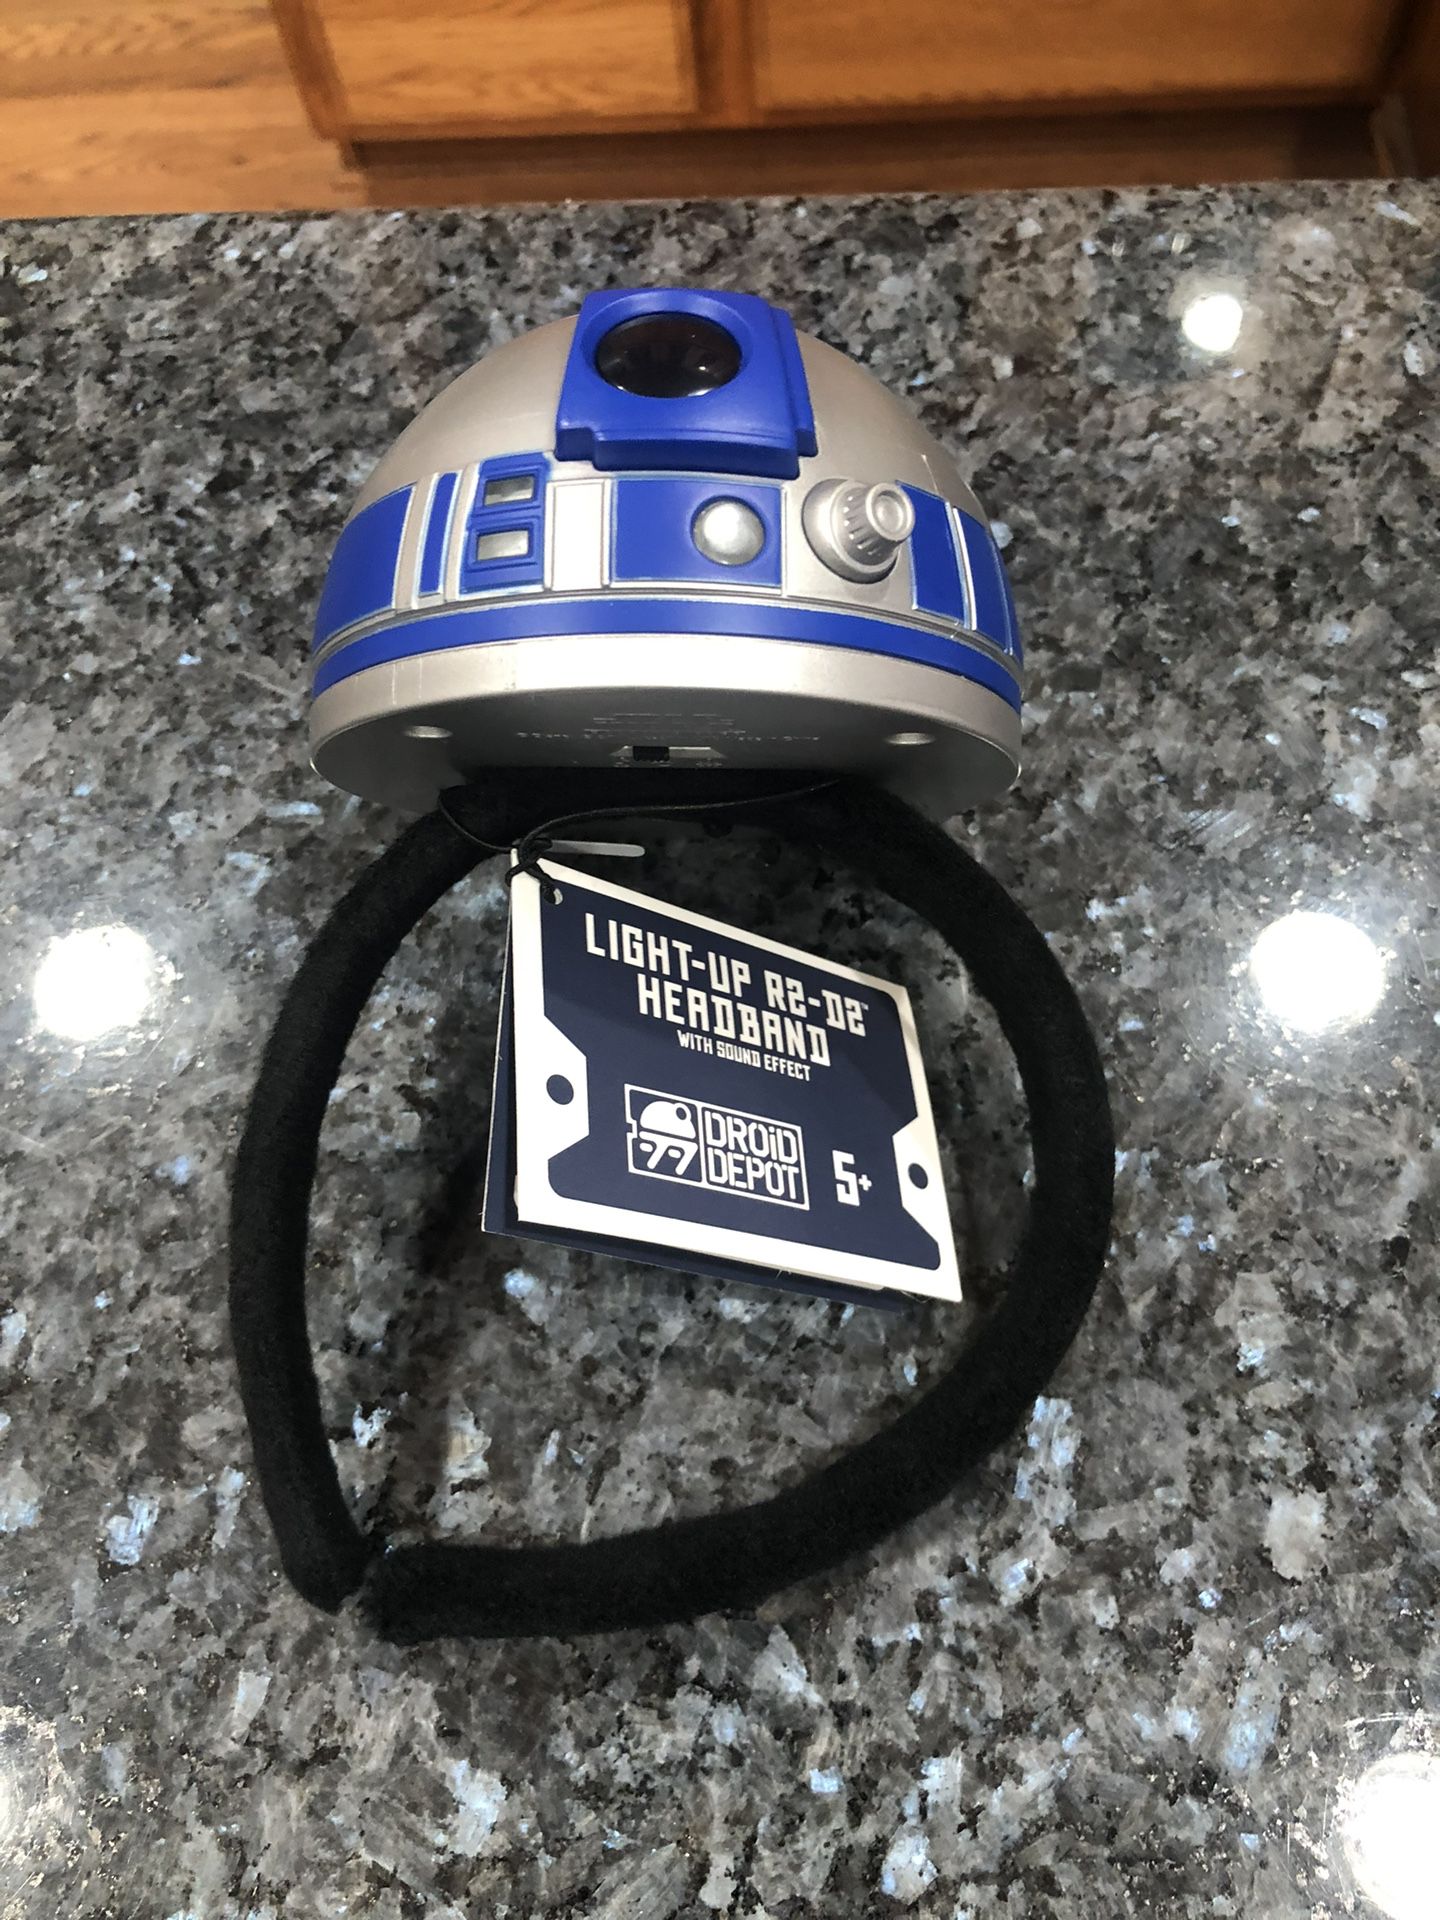 Disney R2-D2 Light Up Headband Star Wars Galaxy's Edge Sound Effects Disney Parks White 